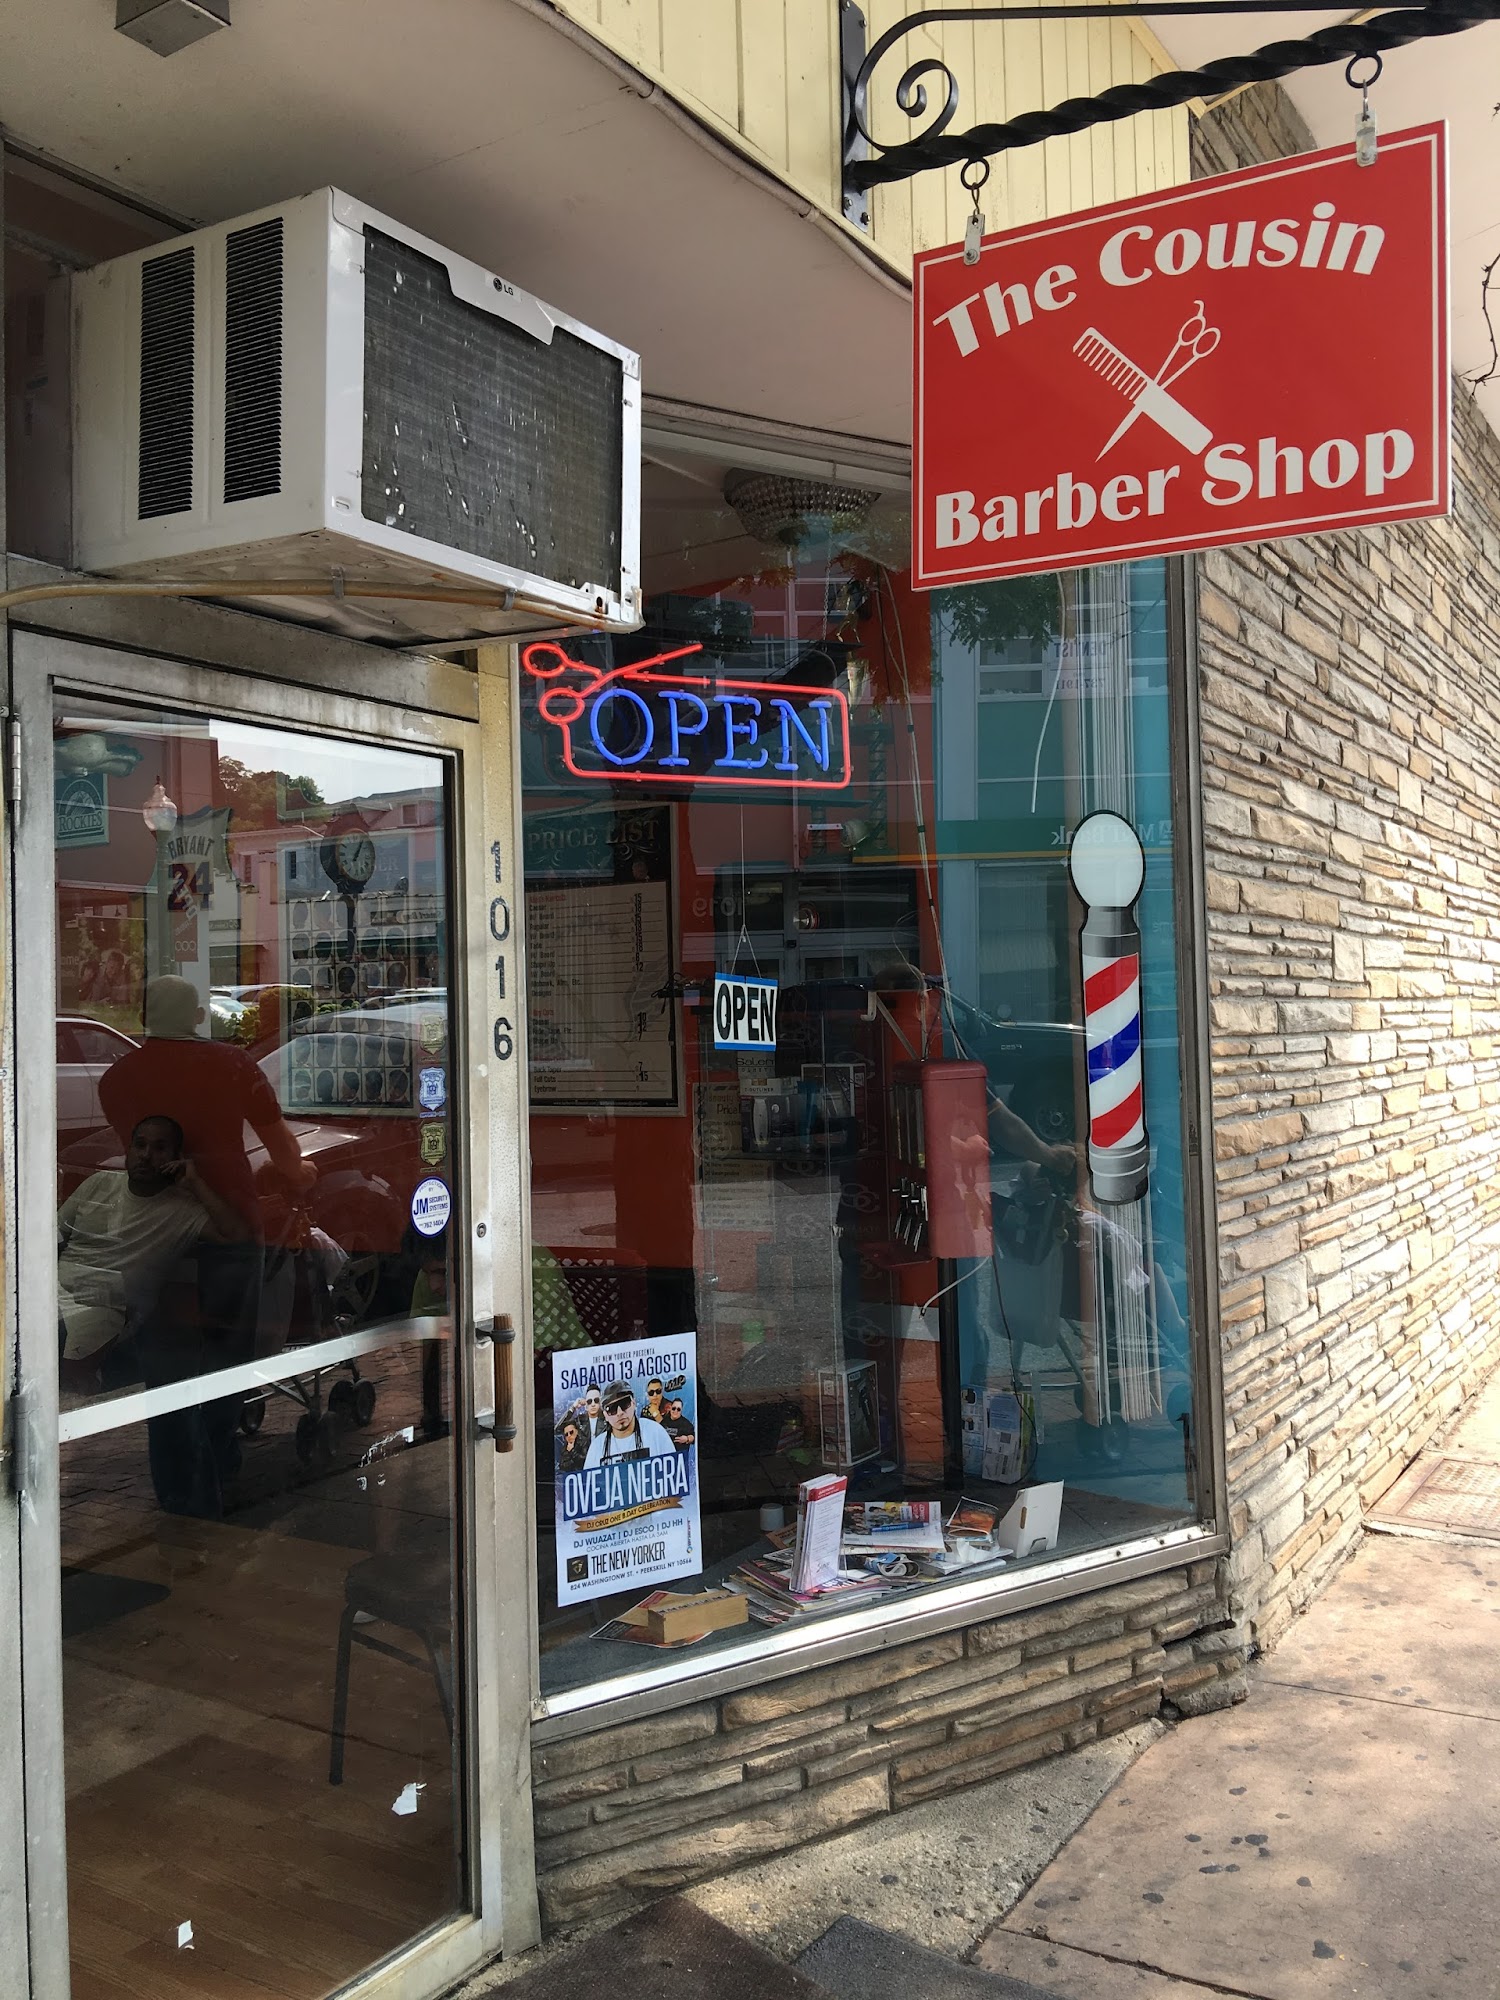 Cousin Barber Shop